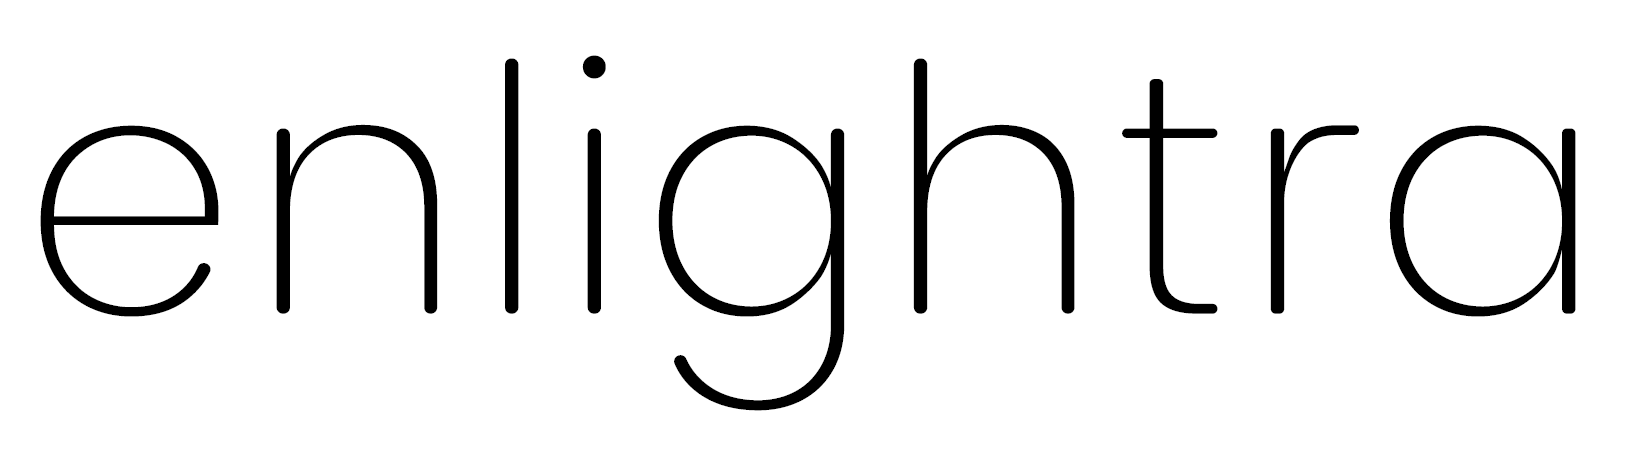 Enlightra logo